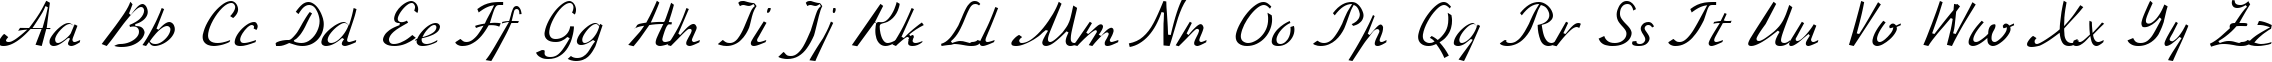 Пример написания английского алфавита шрифтом KursivC